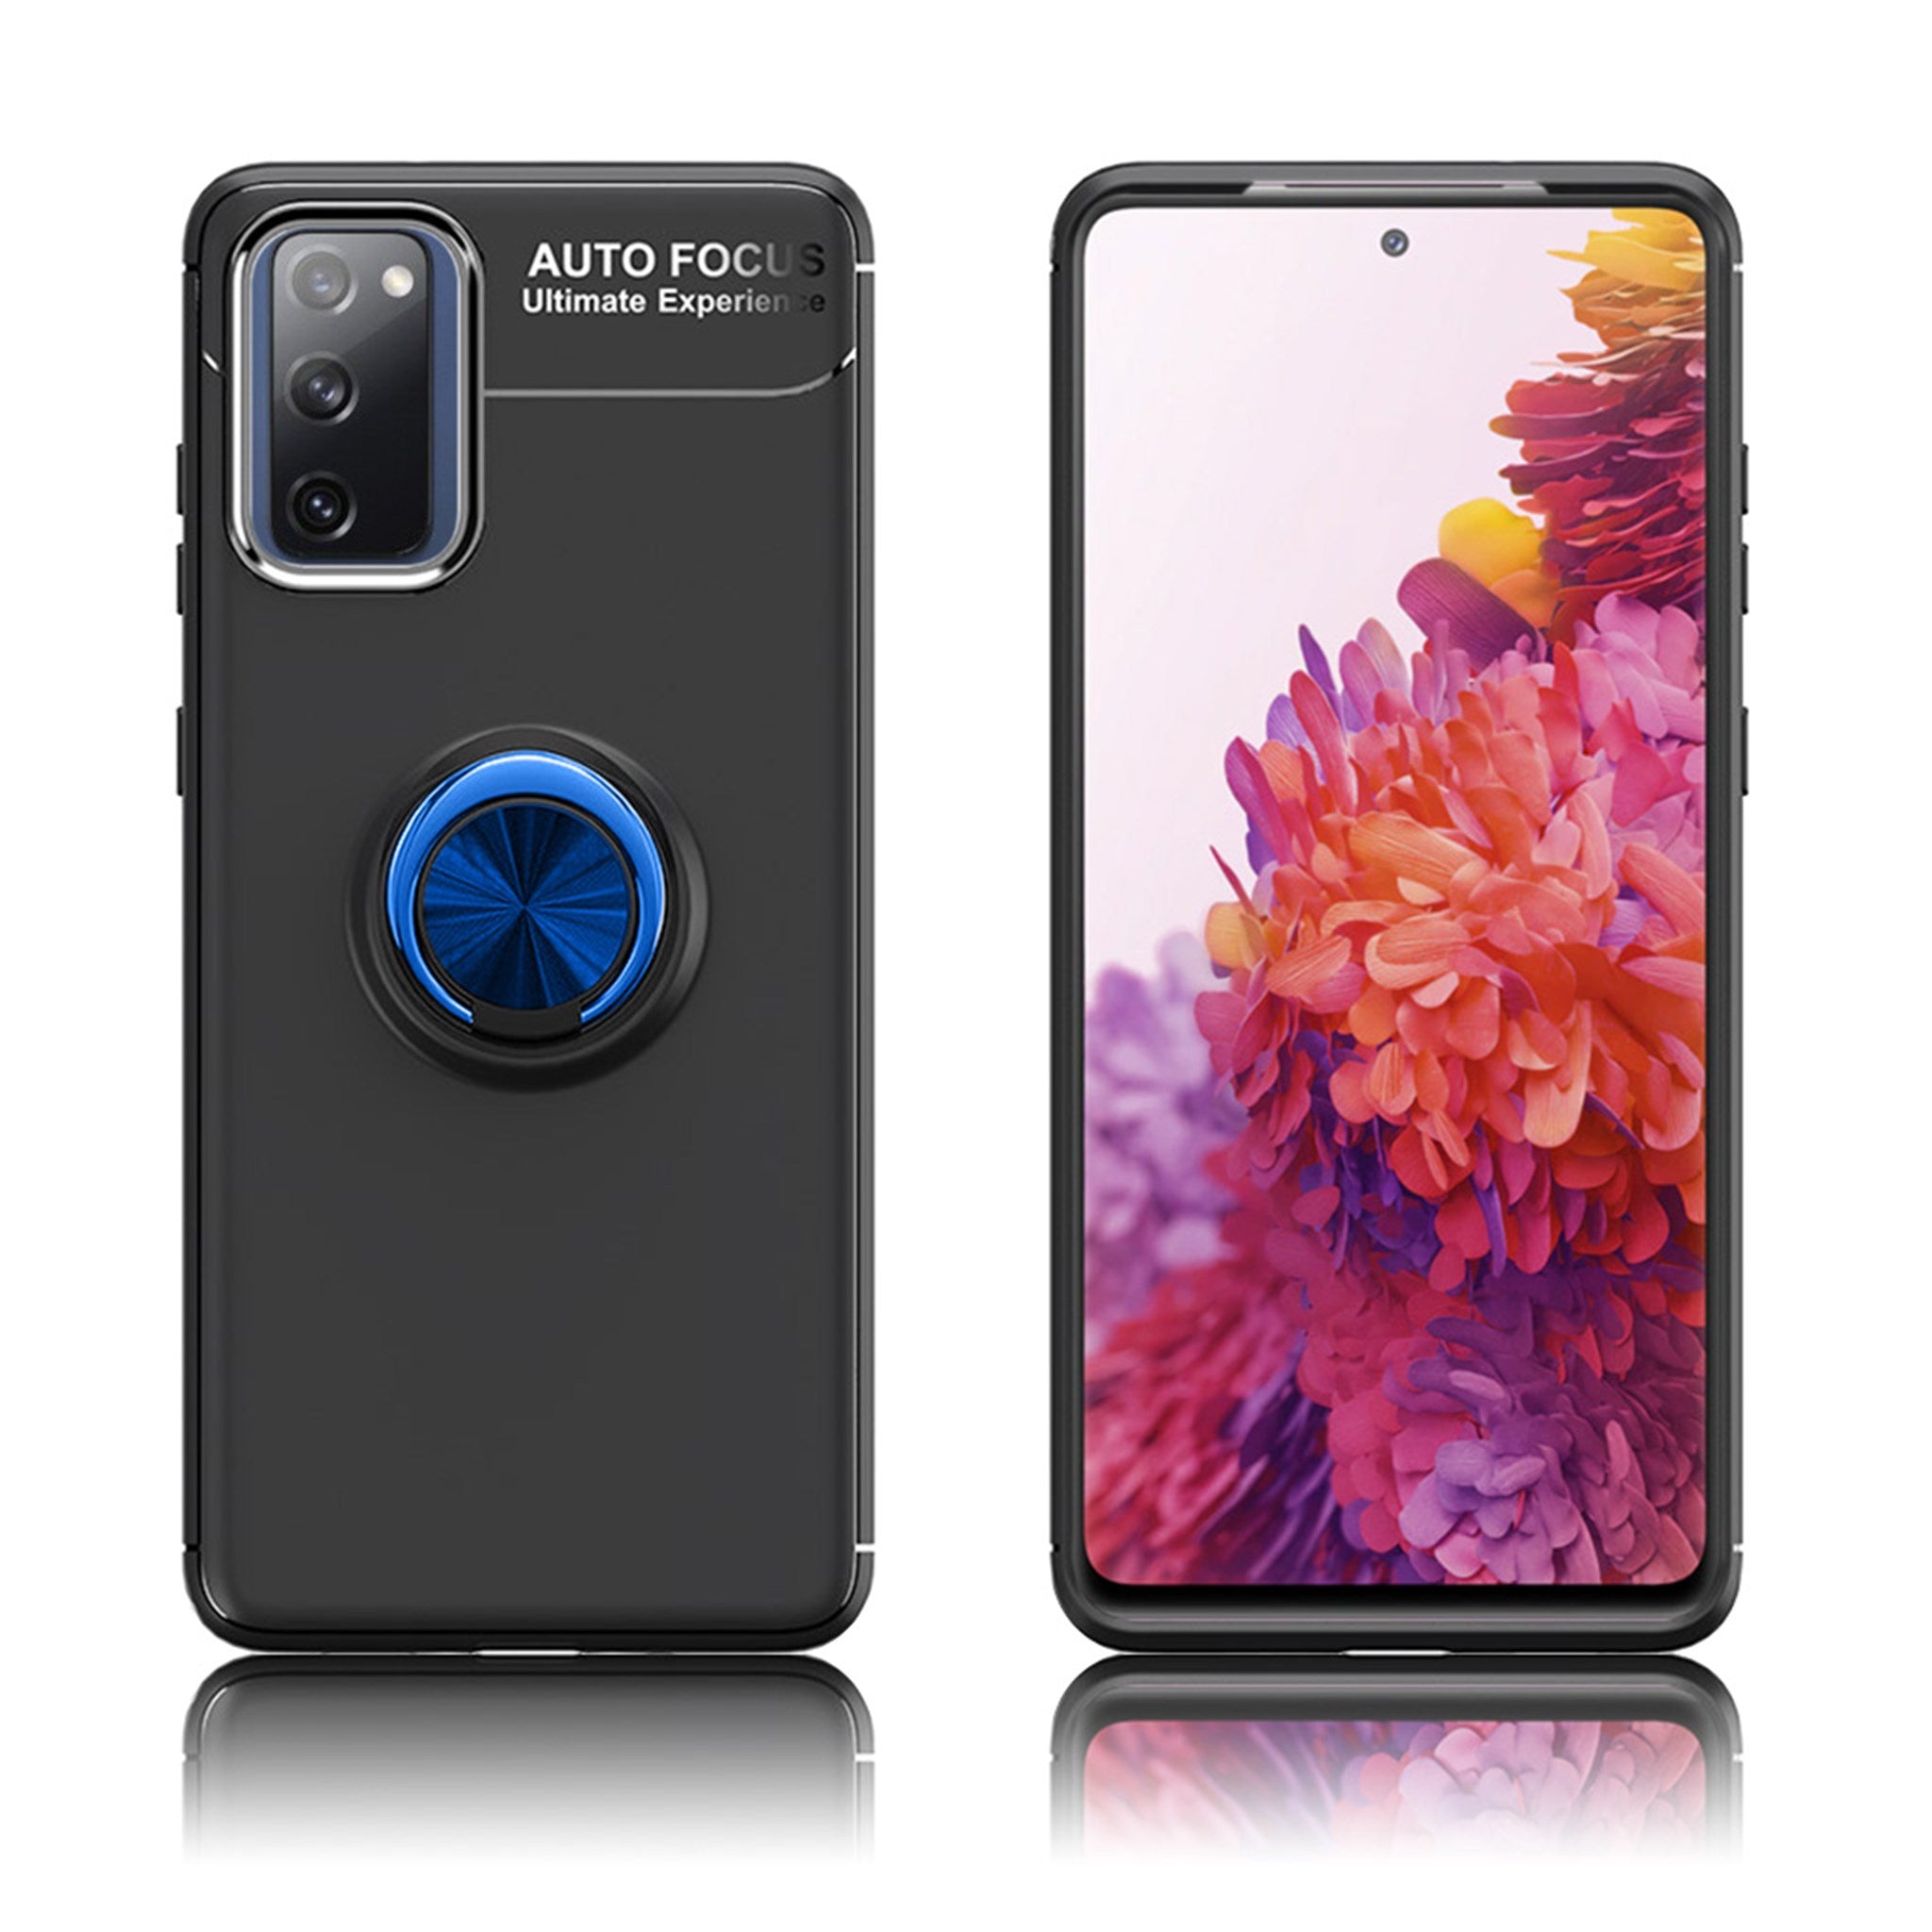 Ringo case - Samsung Galaxy S20 FE - Black / Blue